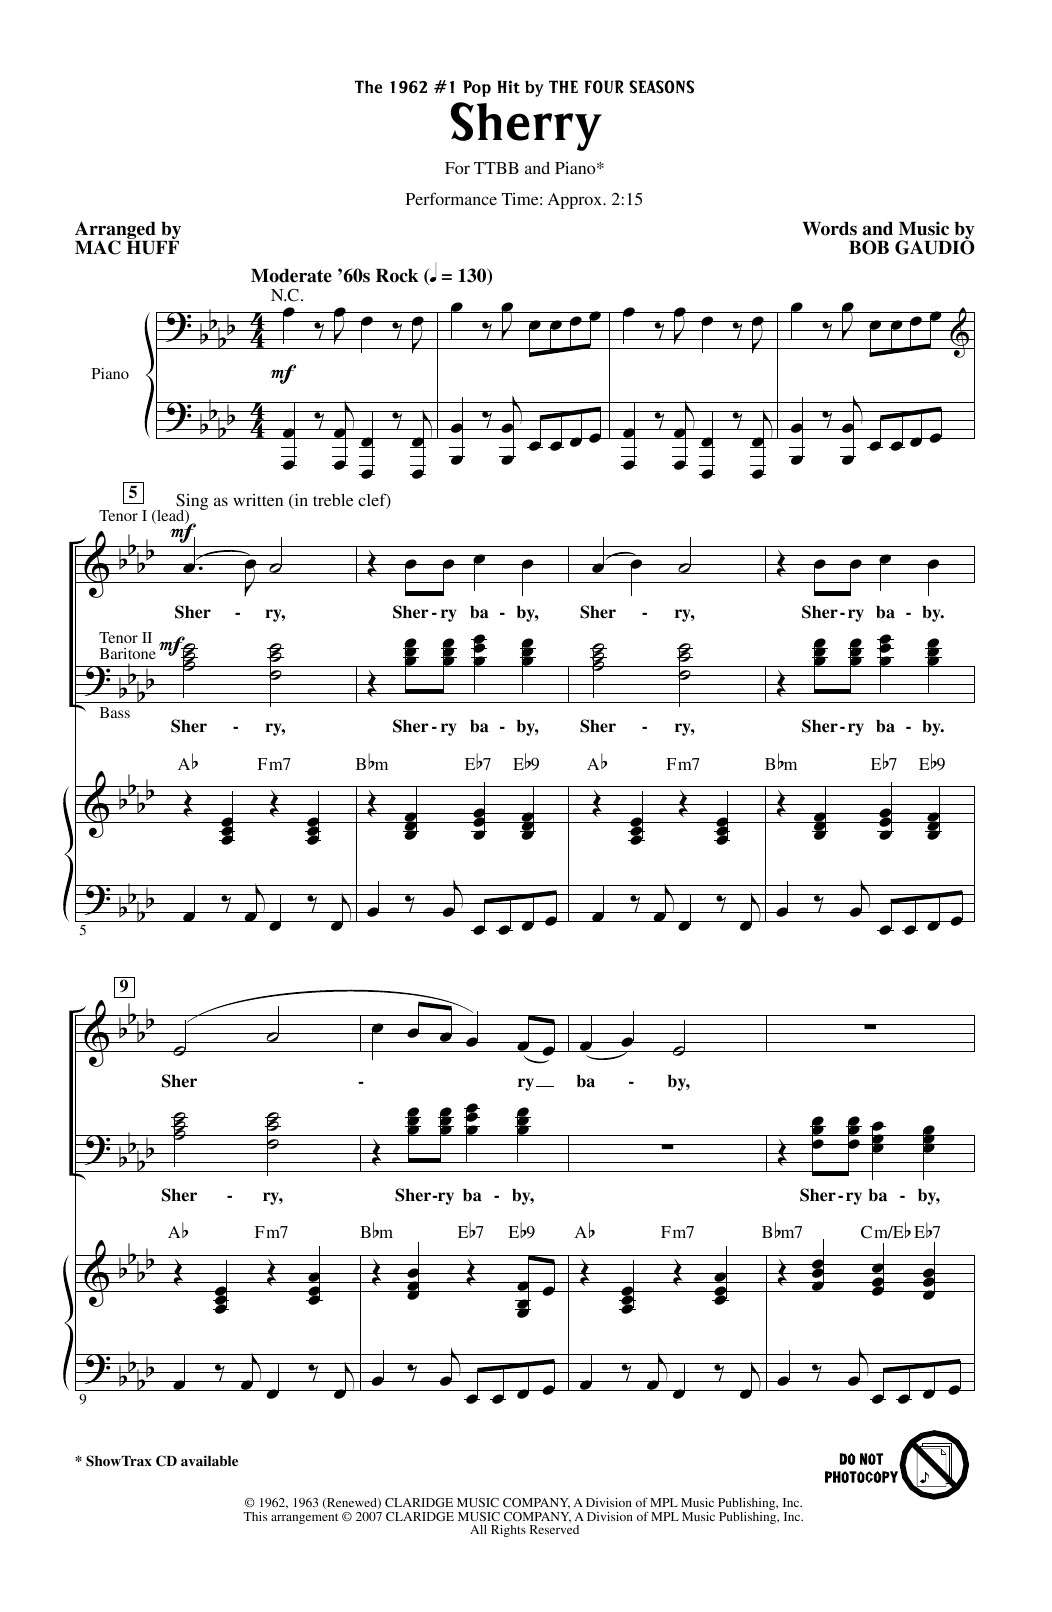 The Four Seasons Sherry (arr. Mac Huff) Sheet Music Notes & Chords for TTBB Choir - Download or Print PDF